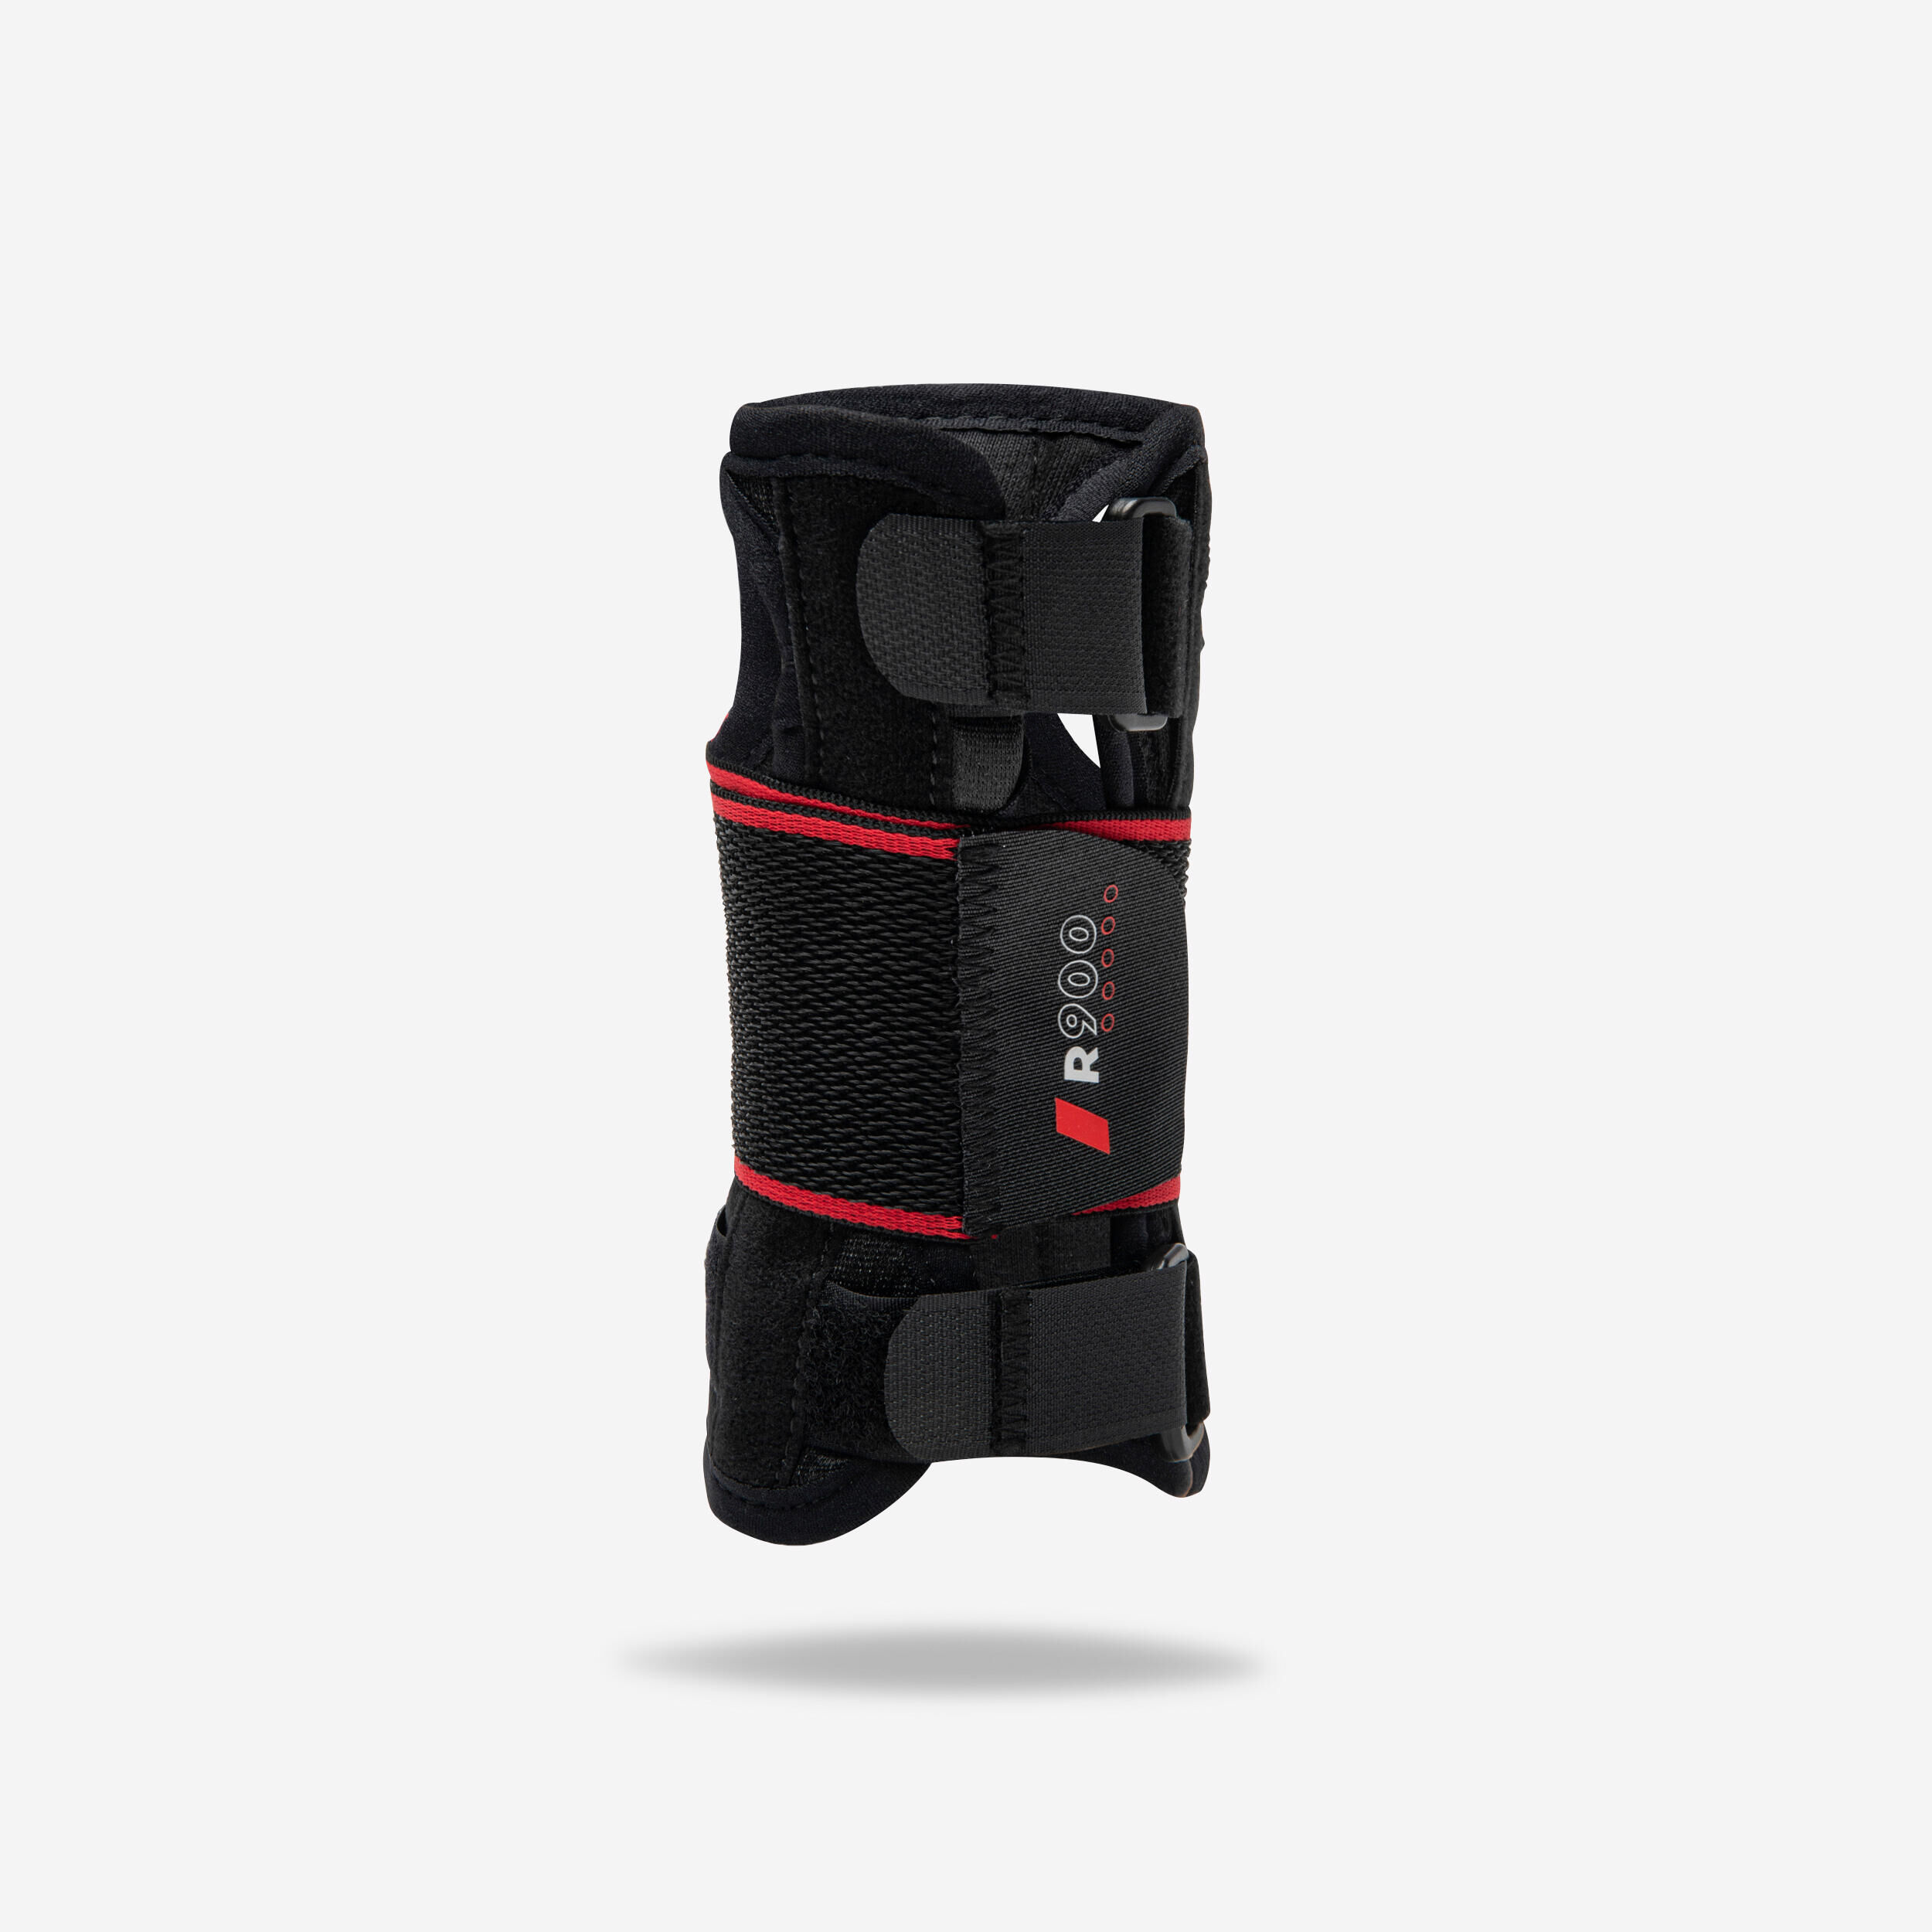 TARMAK Adult Left/Right Wrist Support Strap R900 - Black